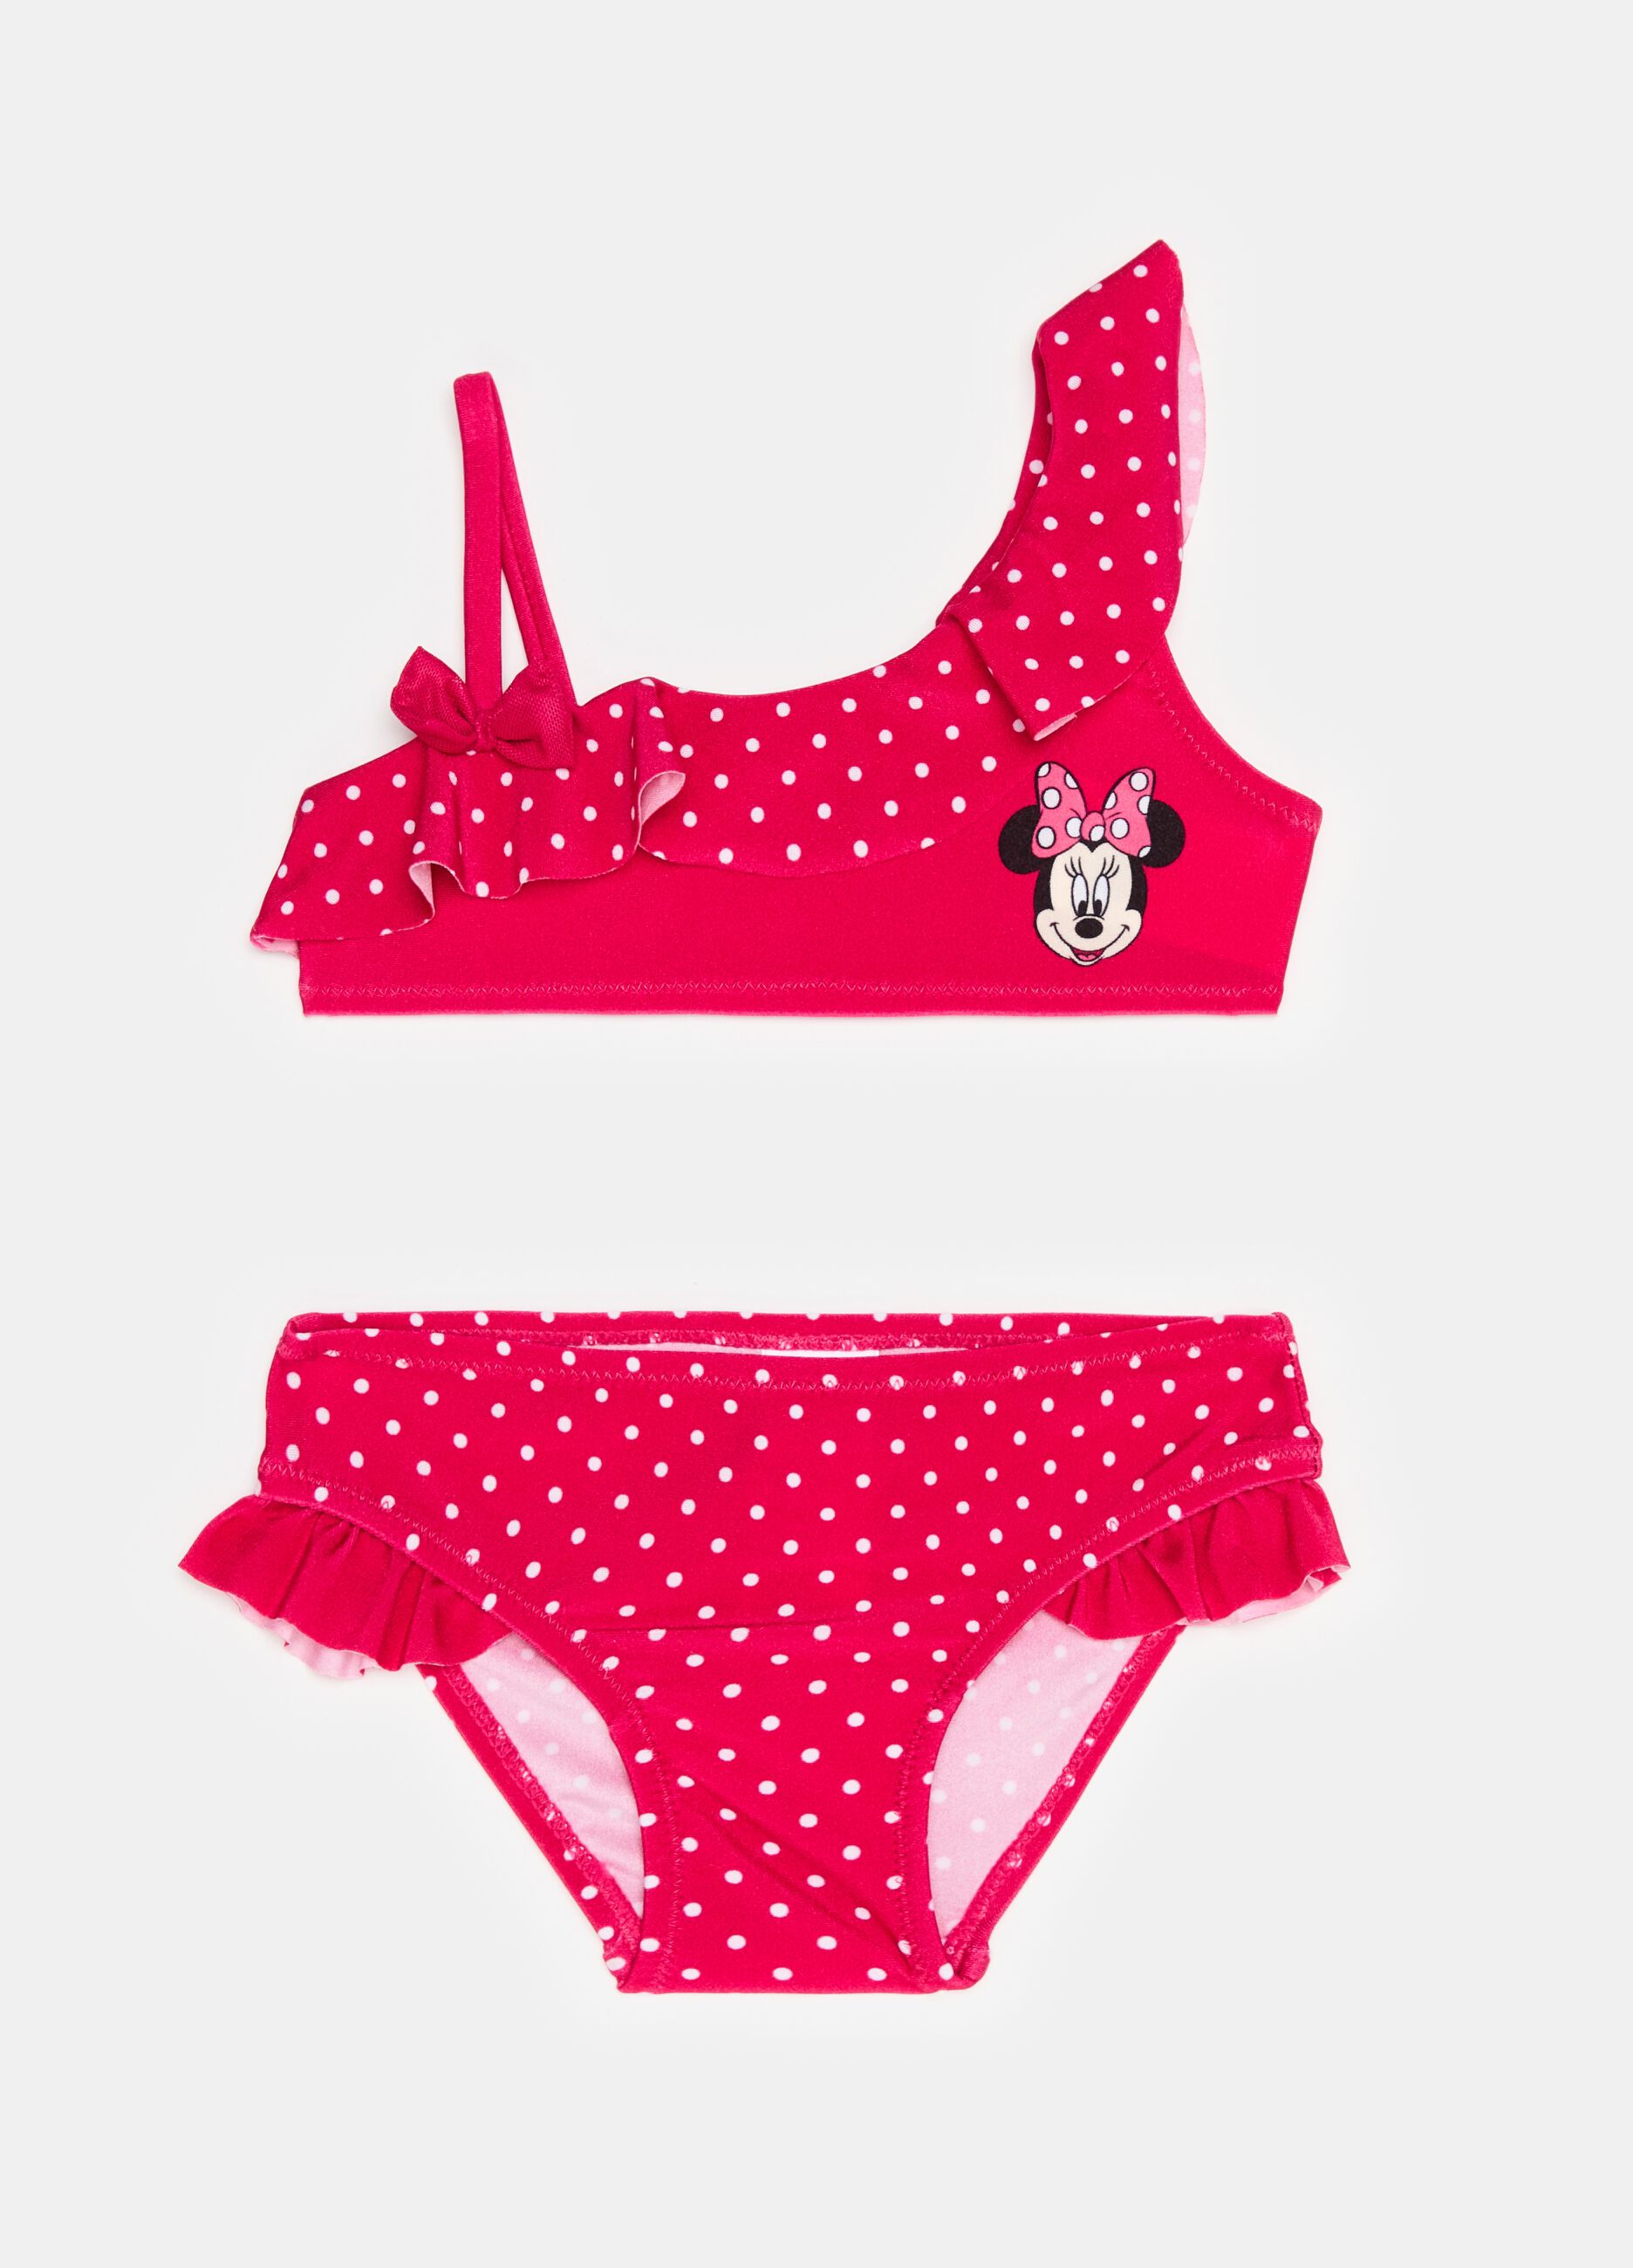 Bikini with Minnie Mouse and polka dot print